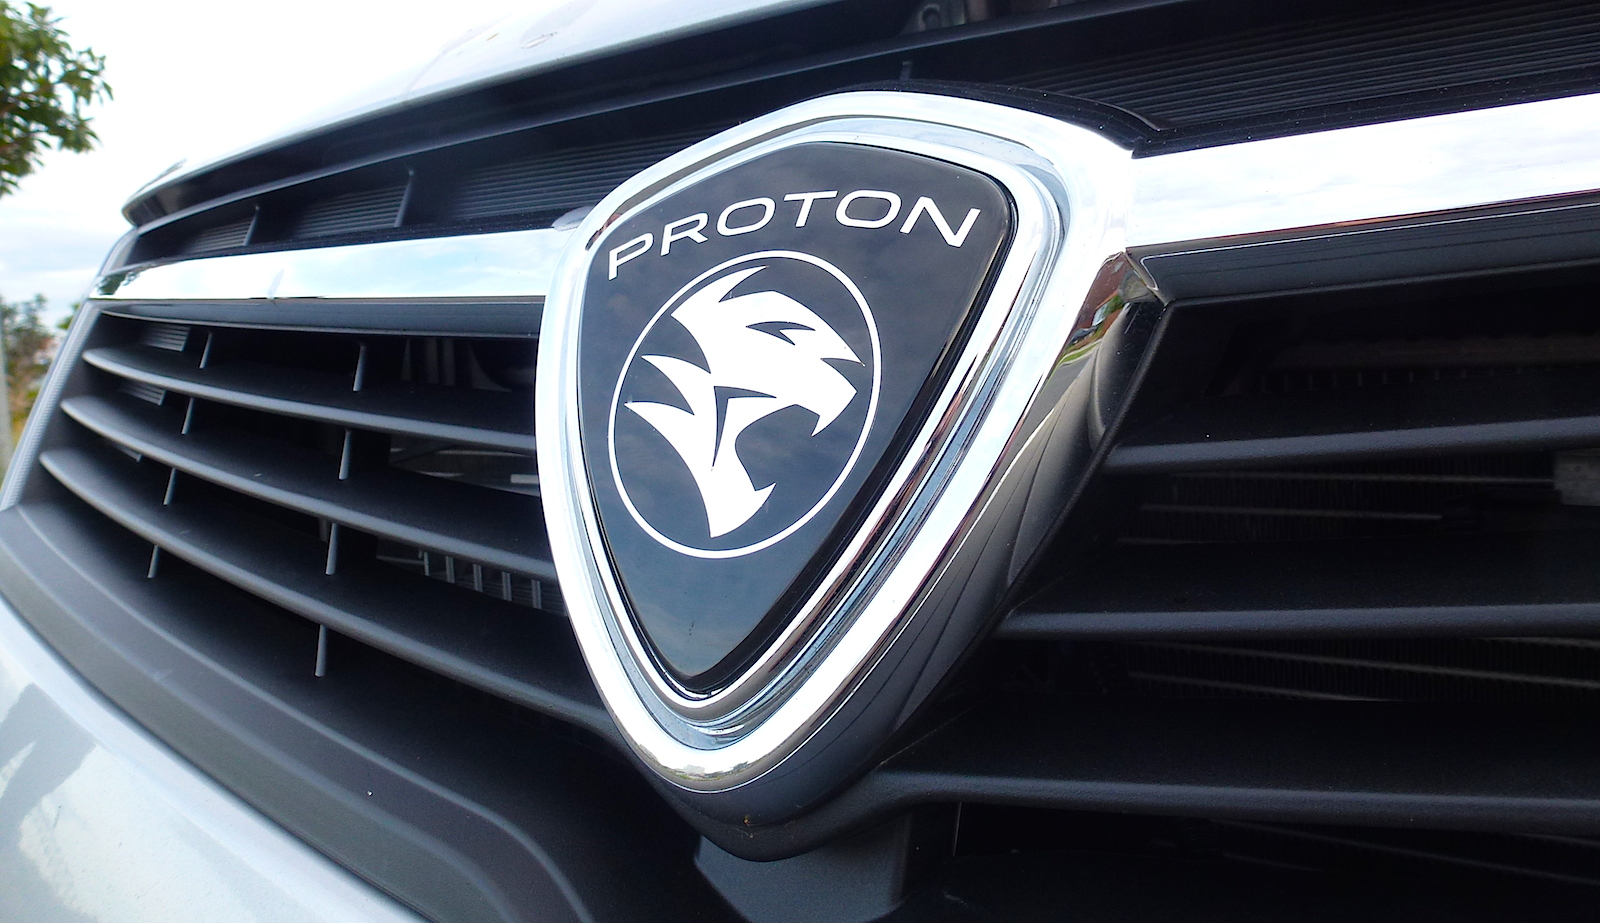 2014 Proton Preve Review : GXR - photos | CarAdvice